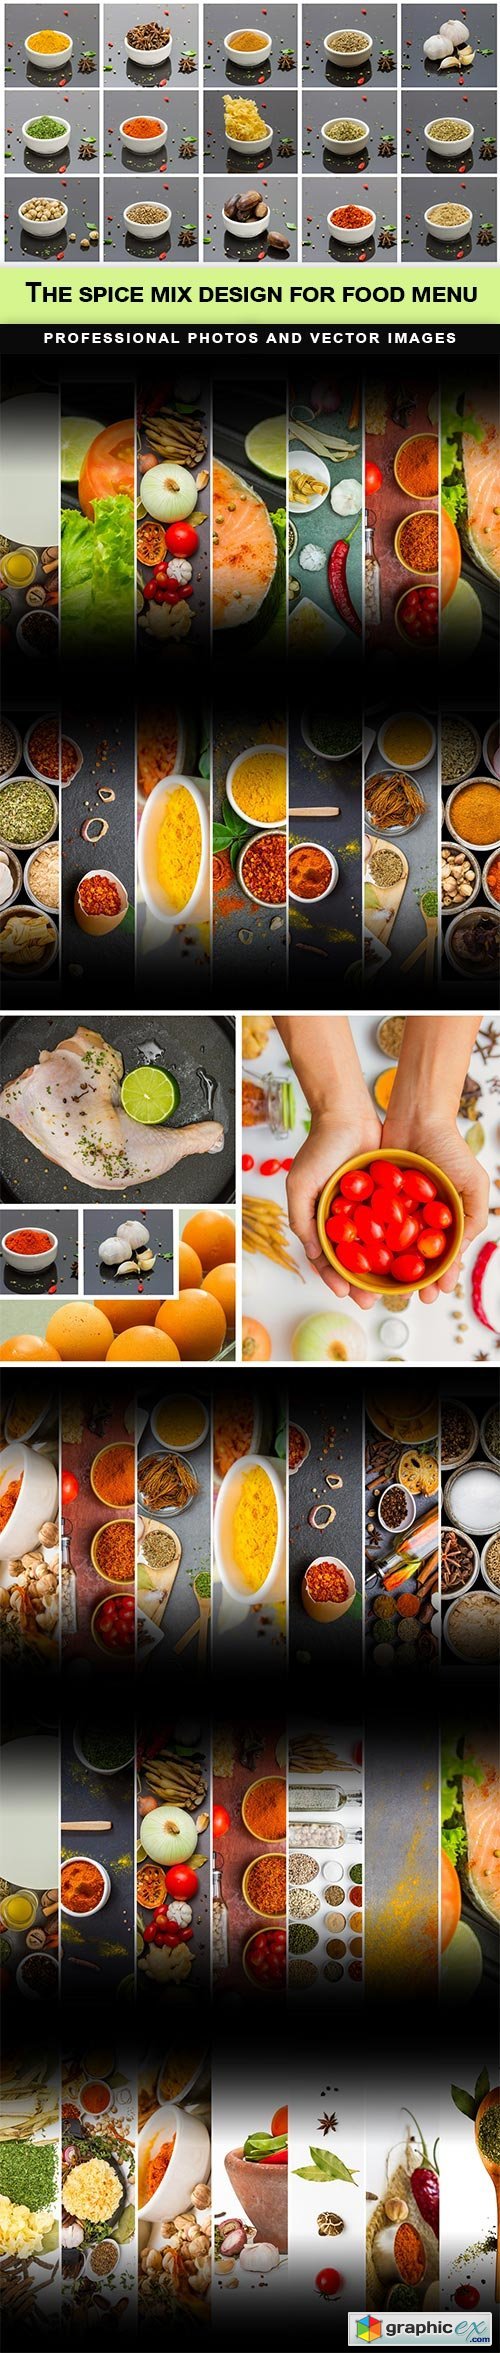 The spice mix design for food menu - 7 UHQ JPEG